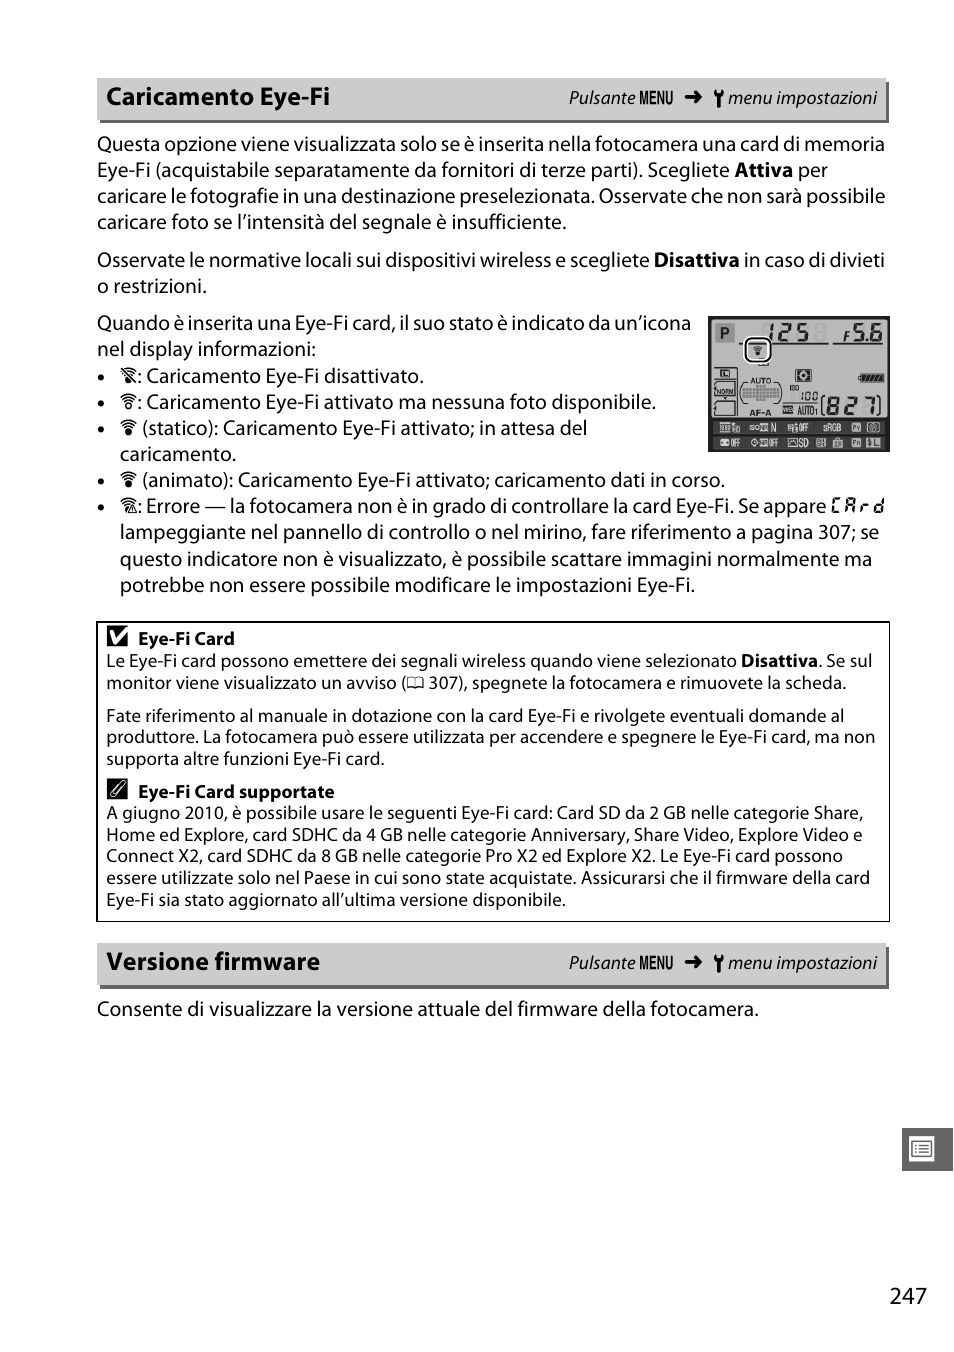 Caricamento eye-fi, Versione firmware | Nikon D7000 Manuale d'uso | Pagina 267 / 348